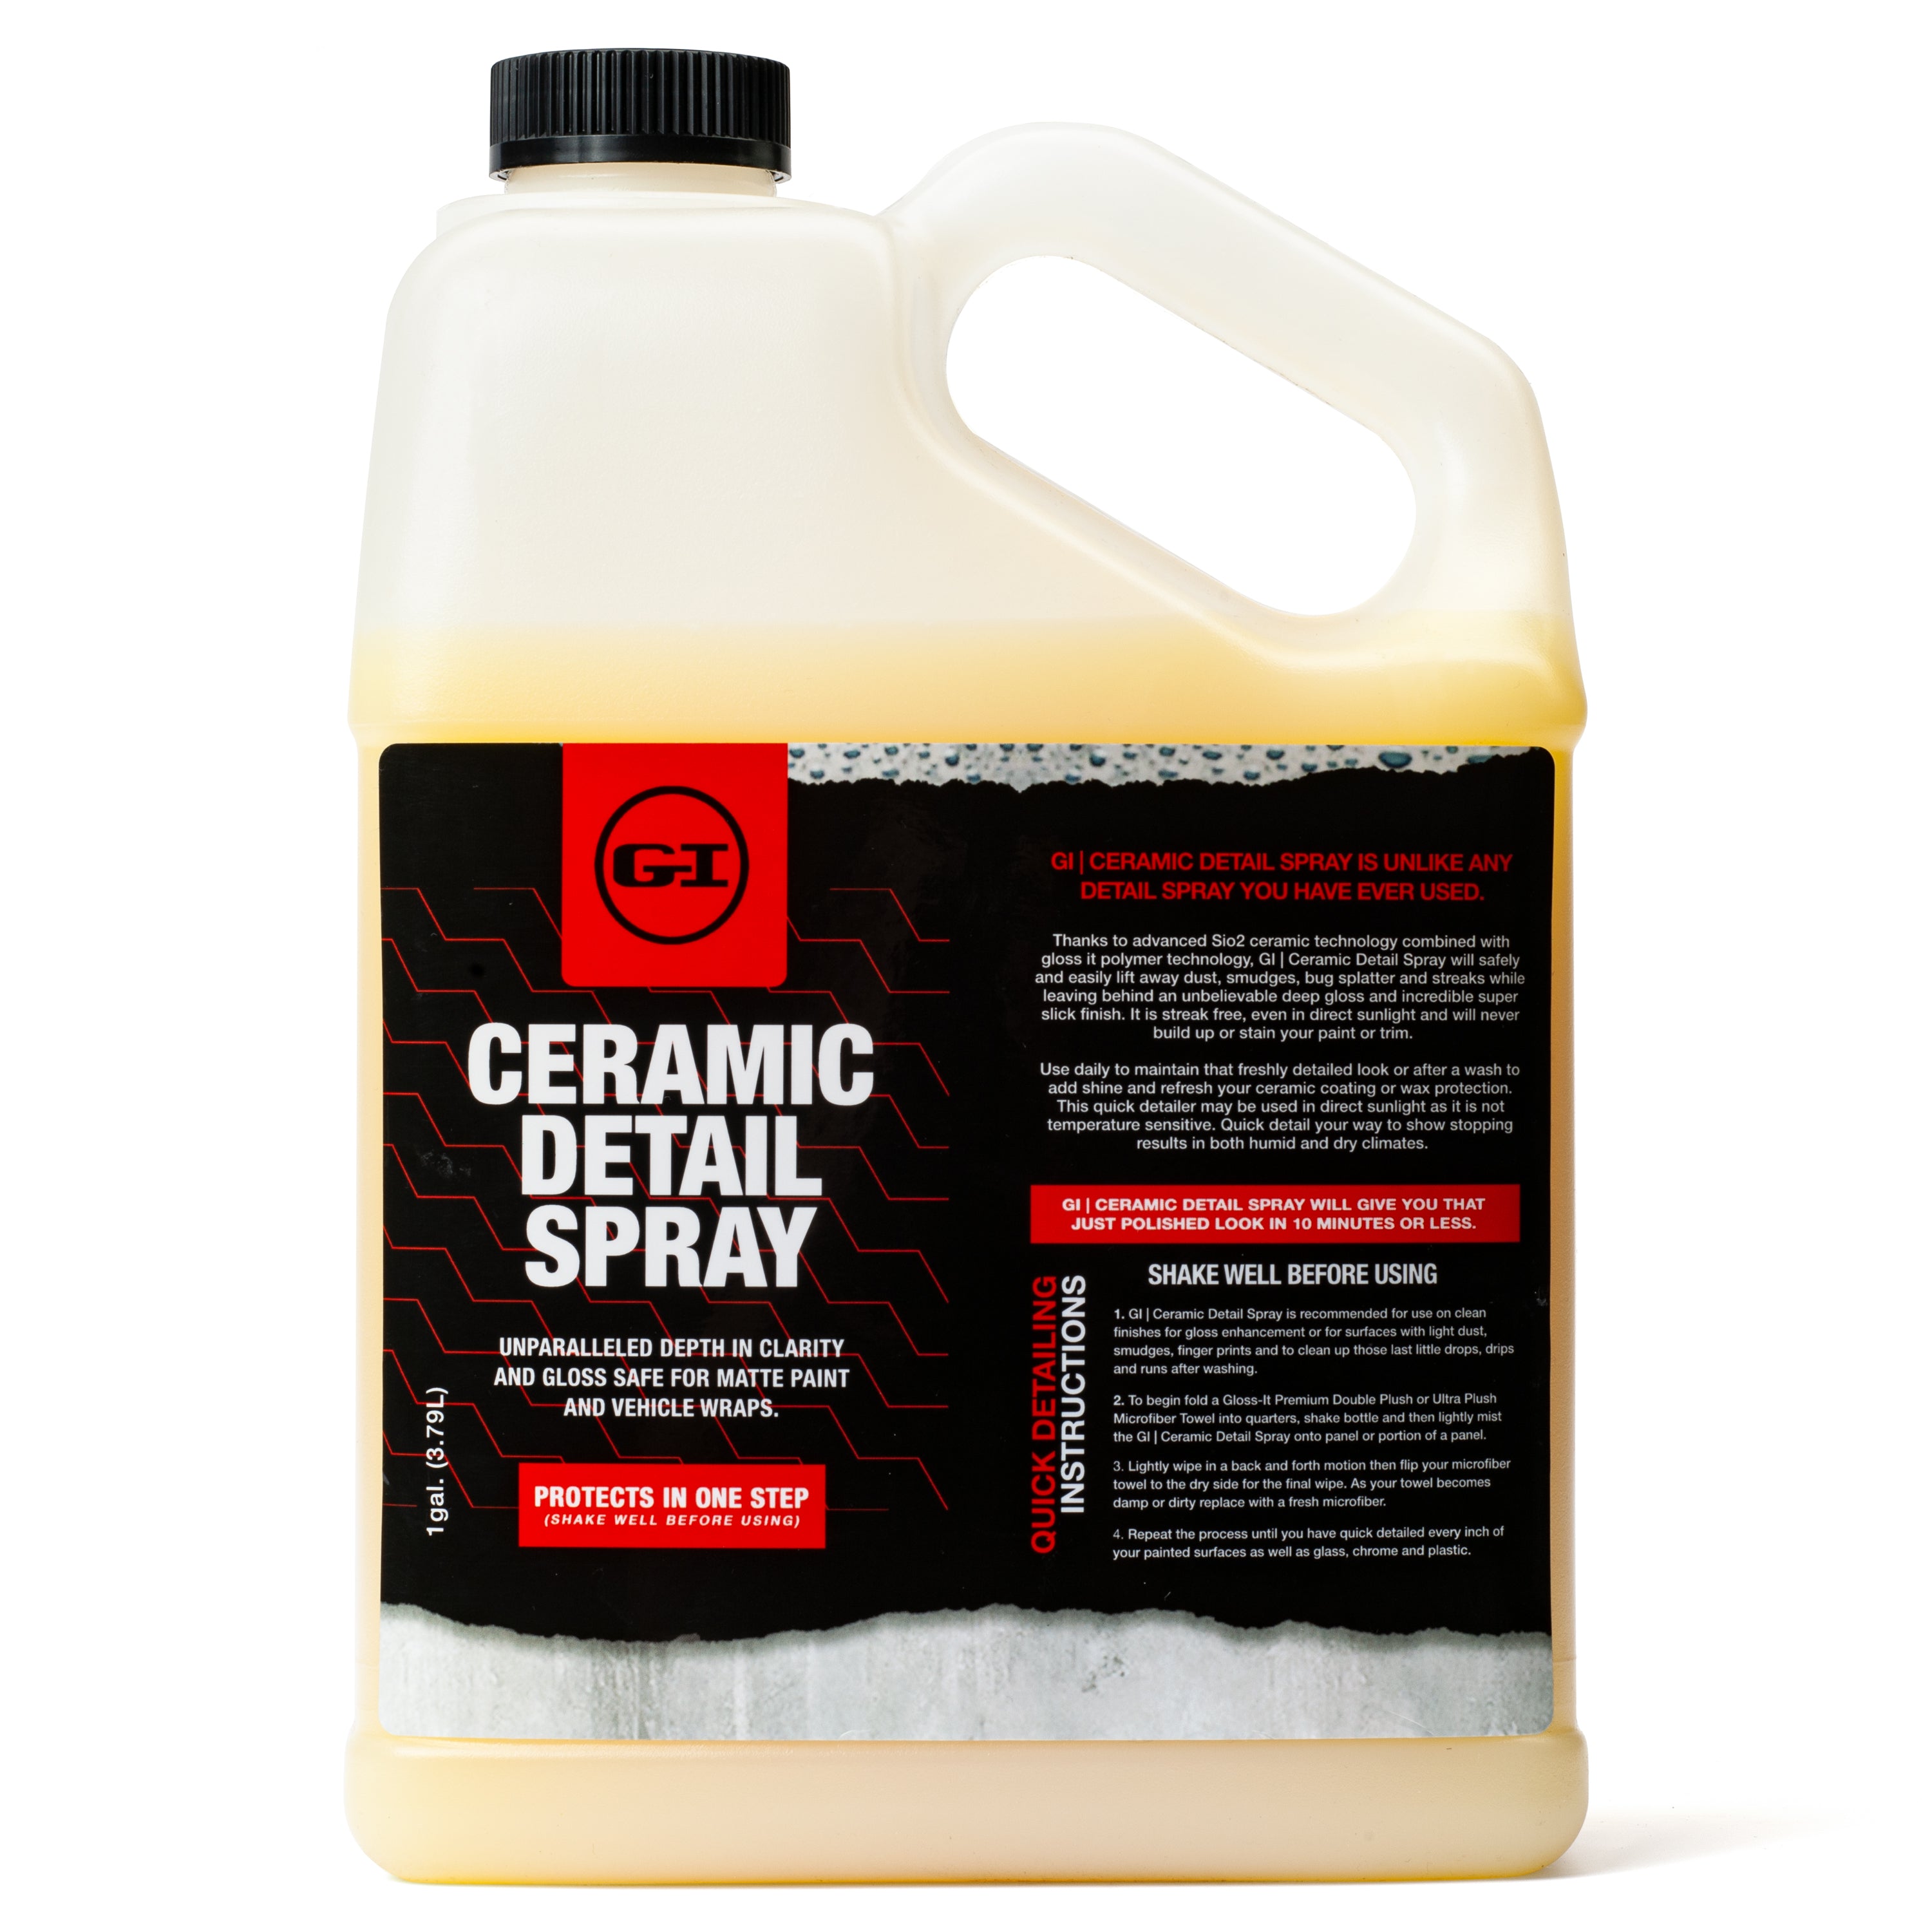 Ceramic Spray Wax and Microfiber Towels